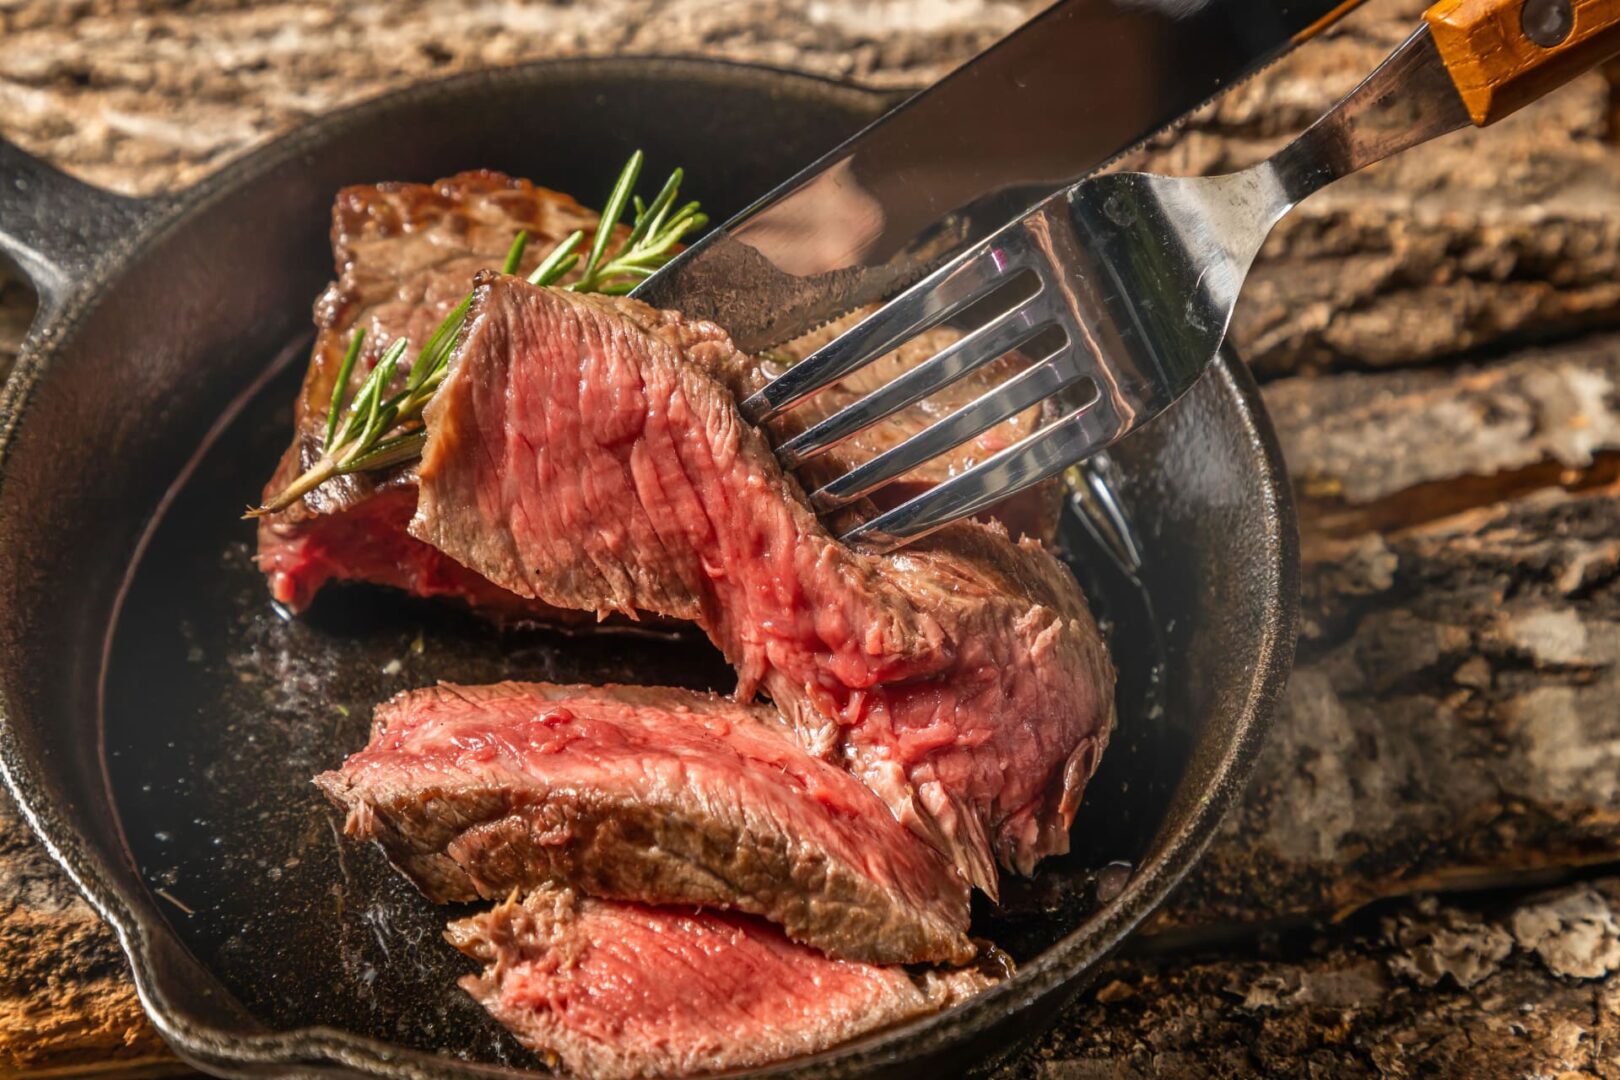 Cast Iron Skillet vs Nonstick Pan - What MAKES a Better Steak